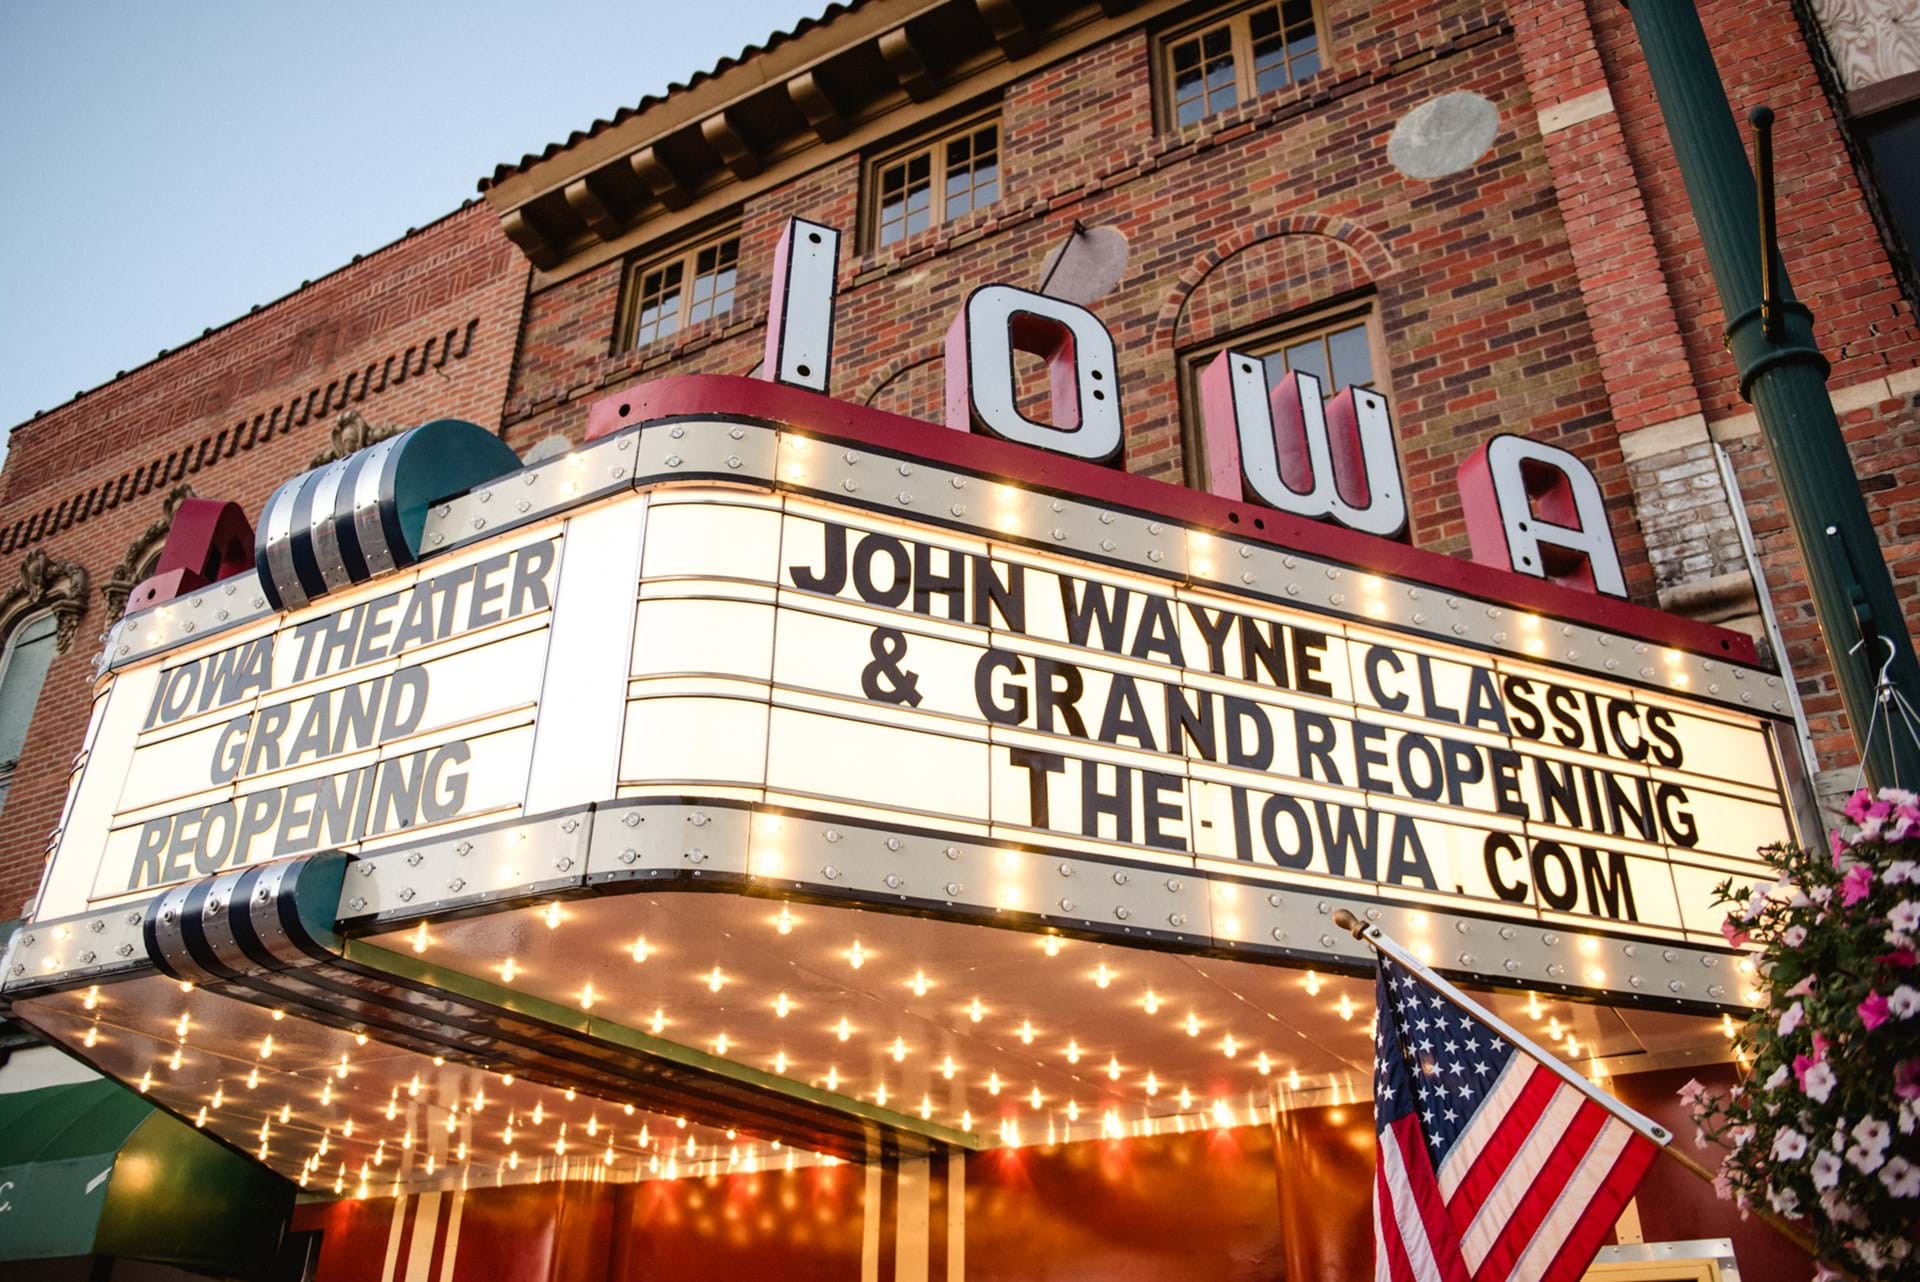 John Wayne Classics at The Iowa Theater